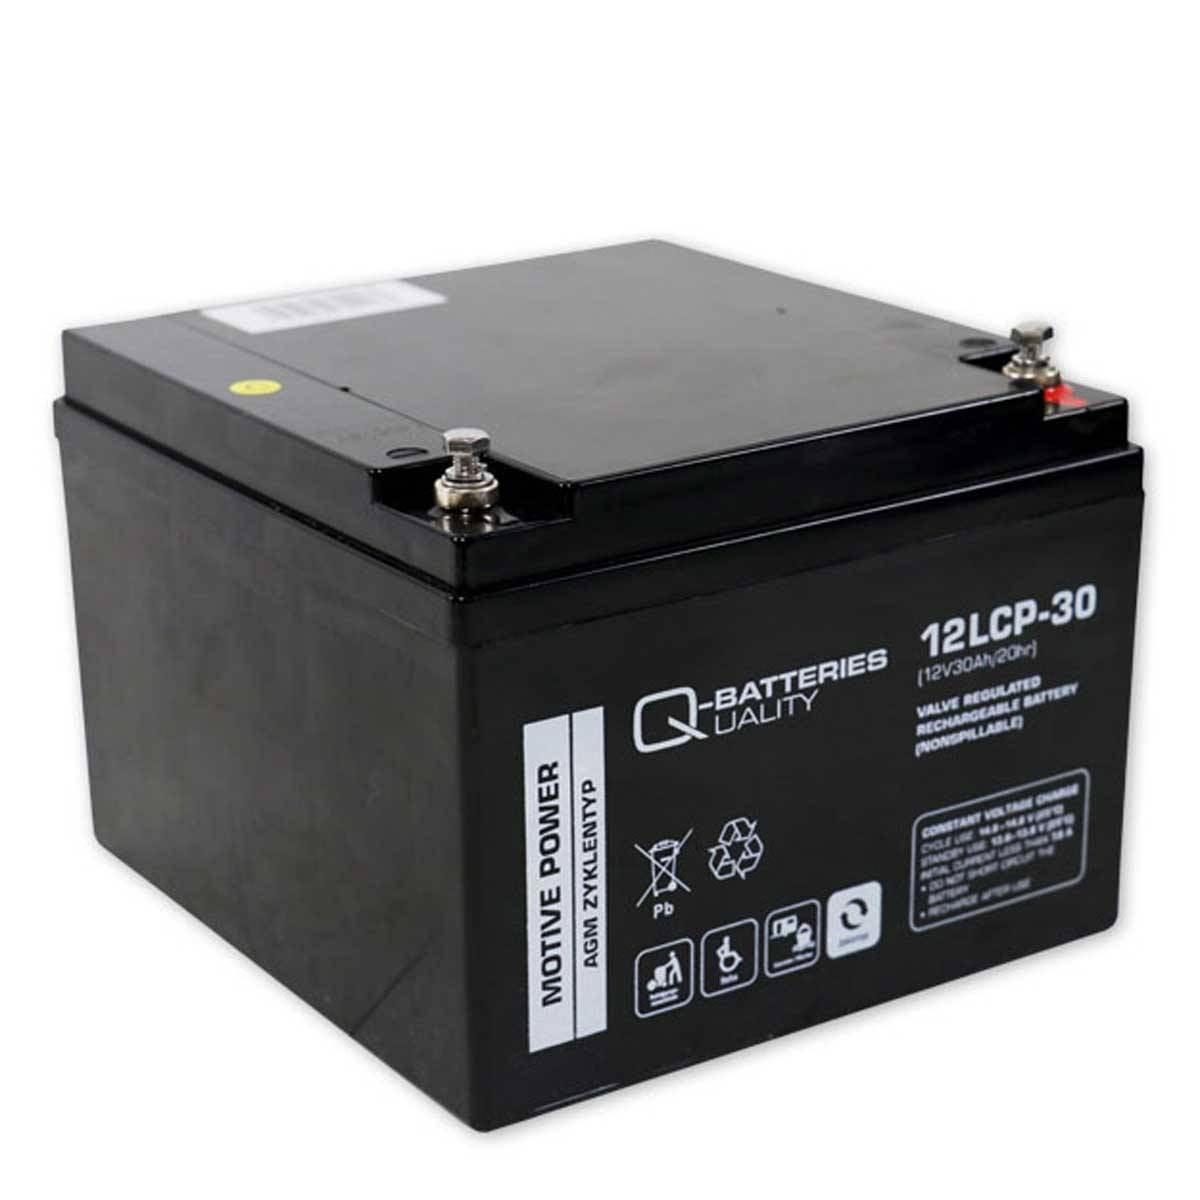 Q-Batterie 12LCP-30 12V 30Ah batteria al piombo tipo AGM - Deep Cycle